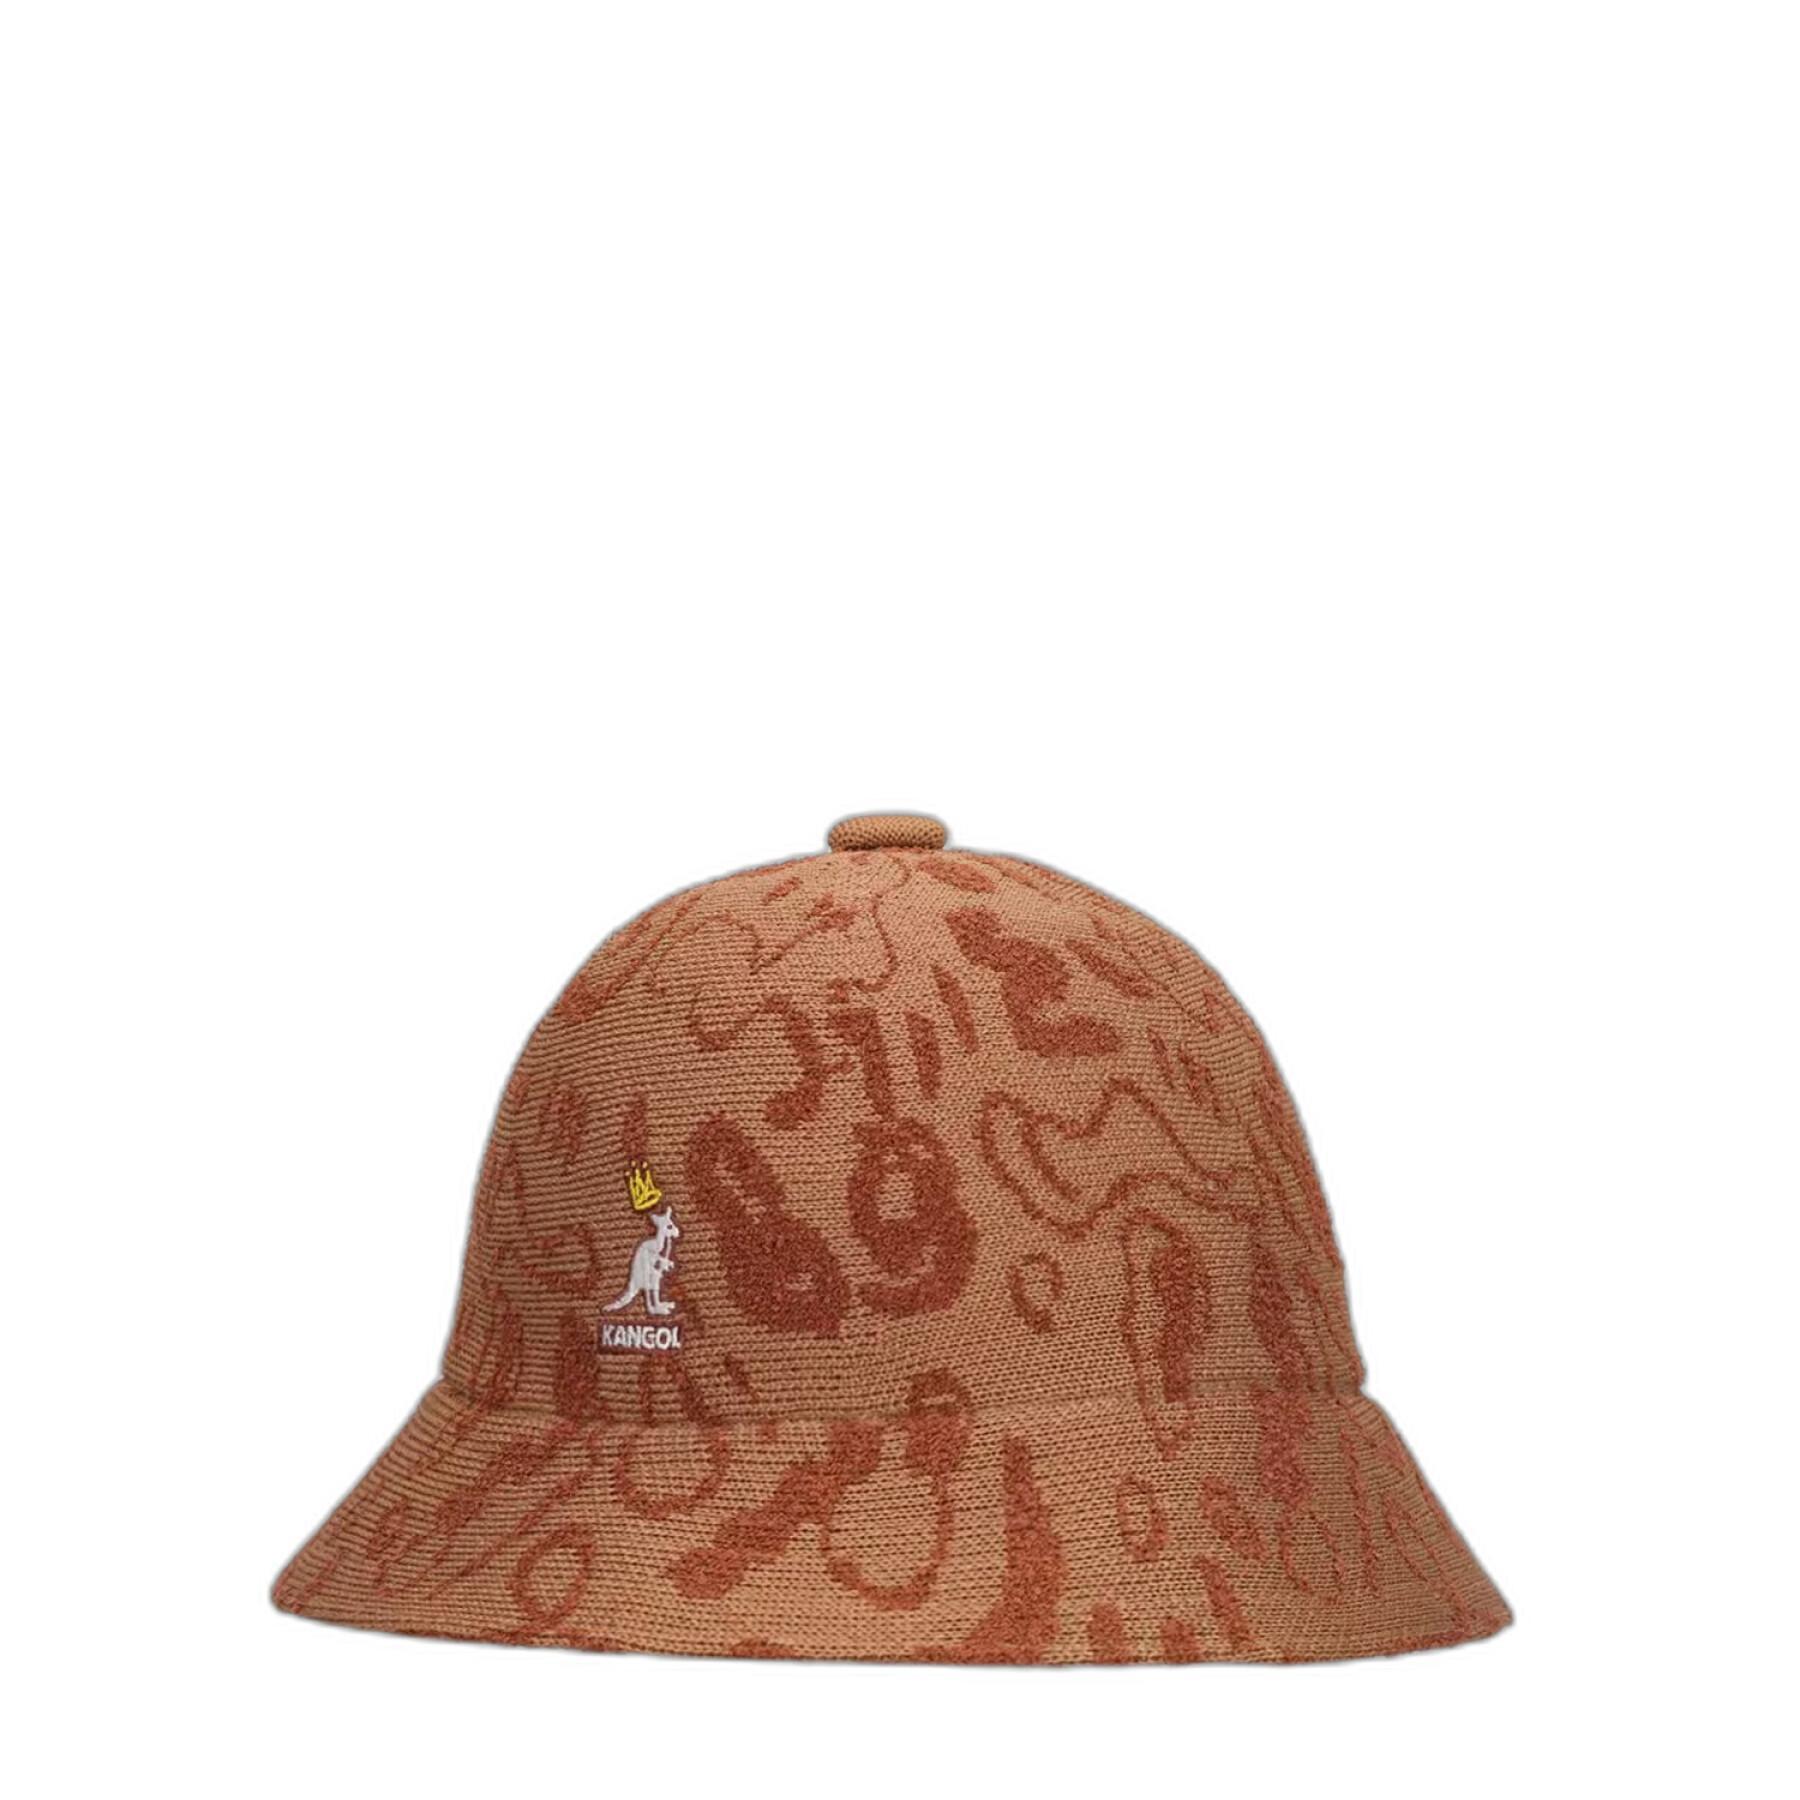 Kangol street king casual bucket hat